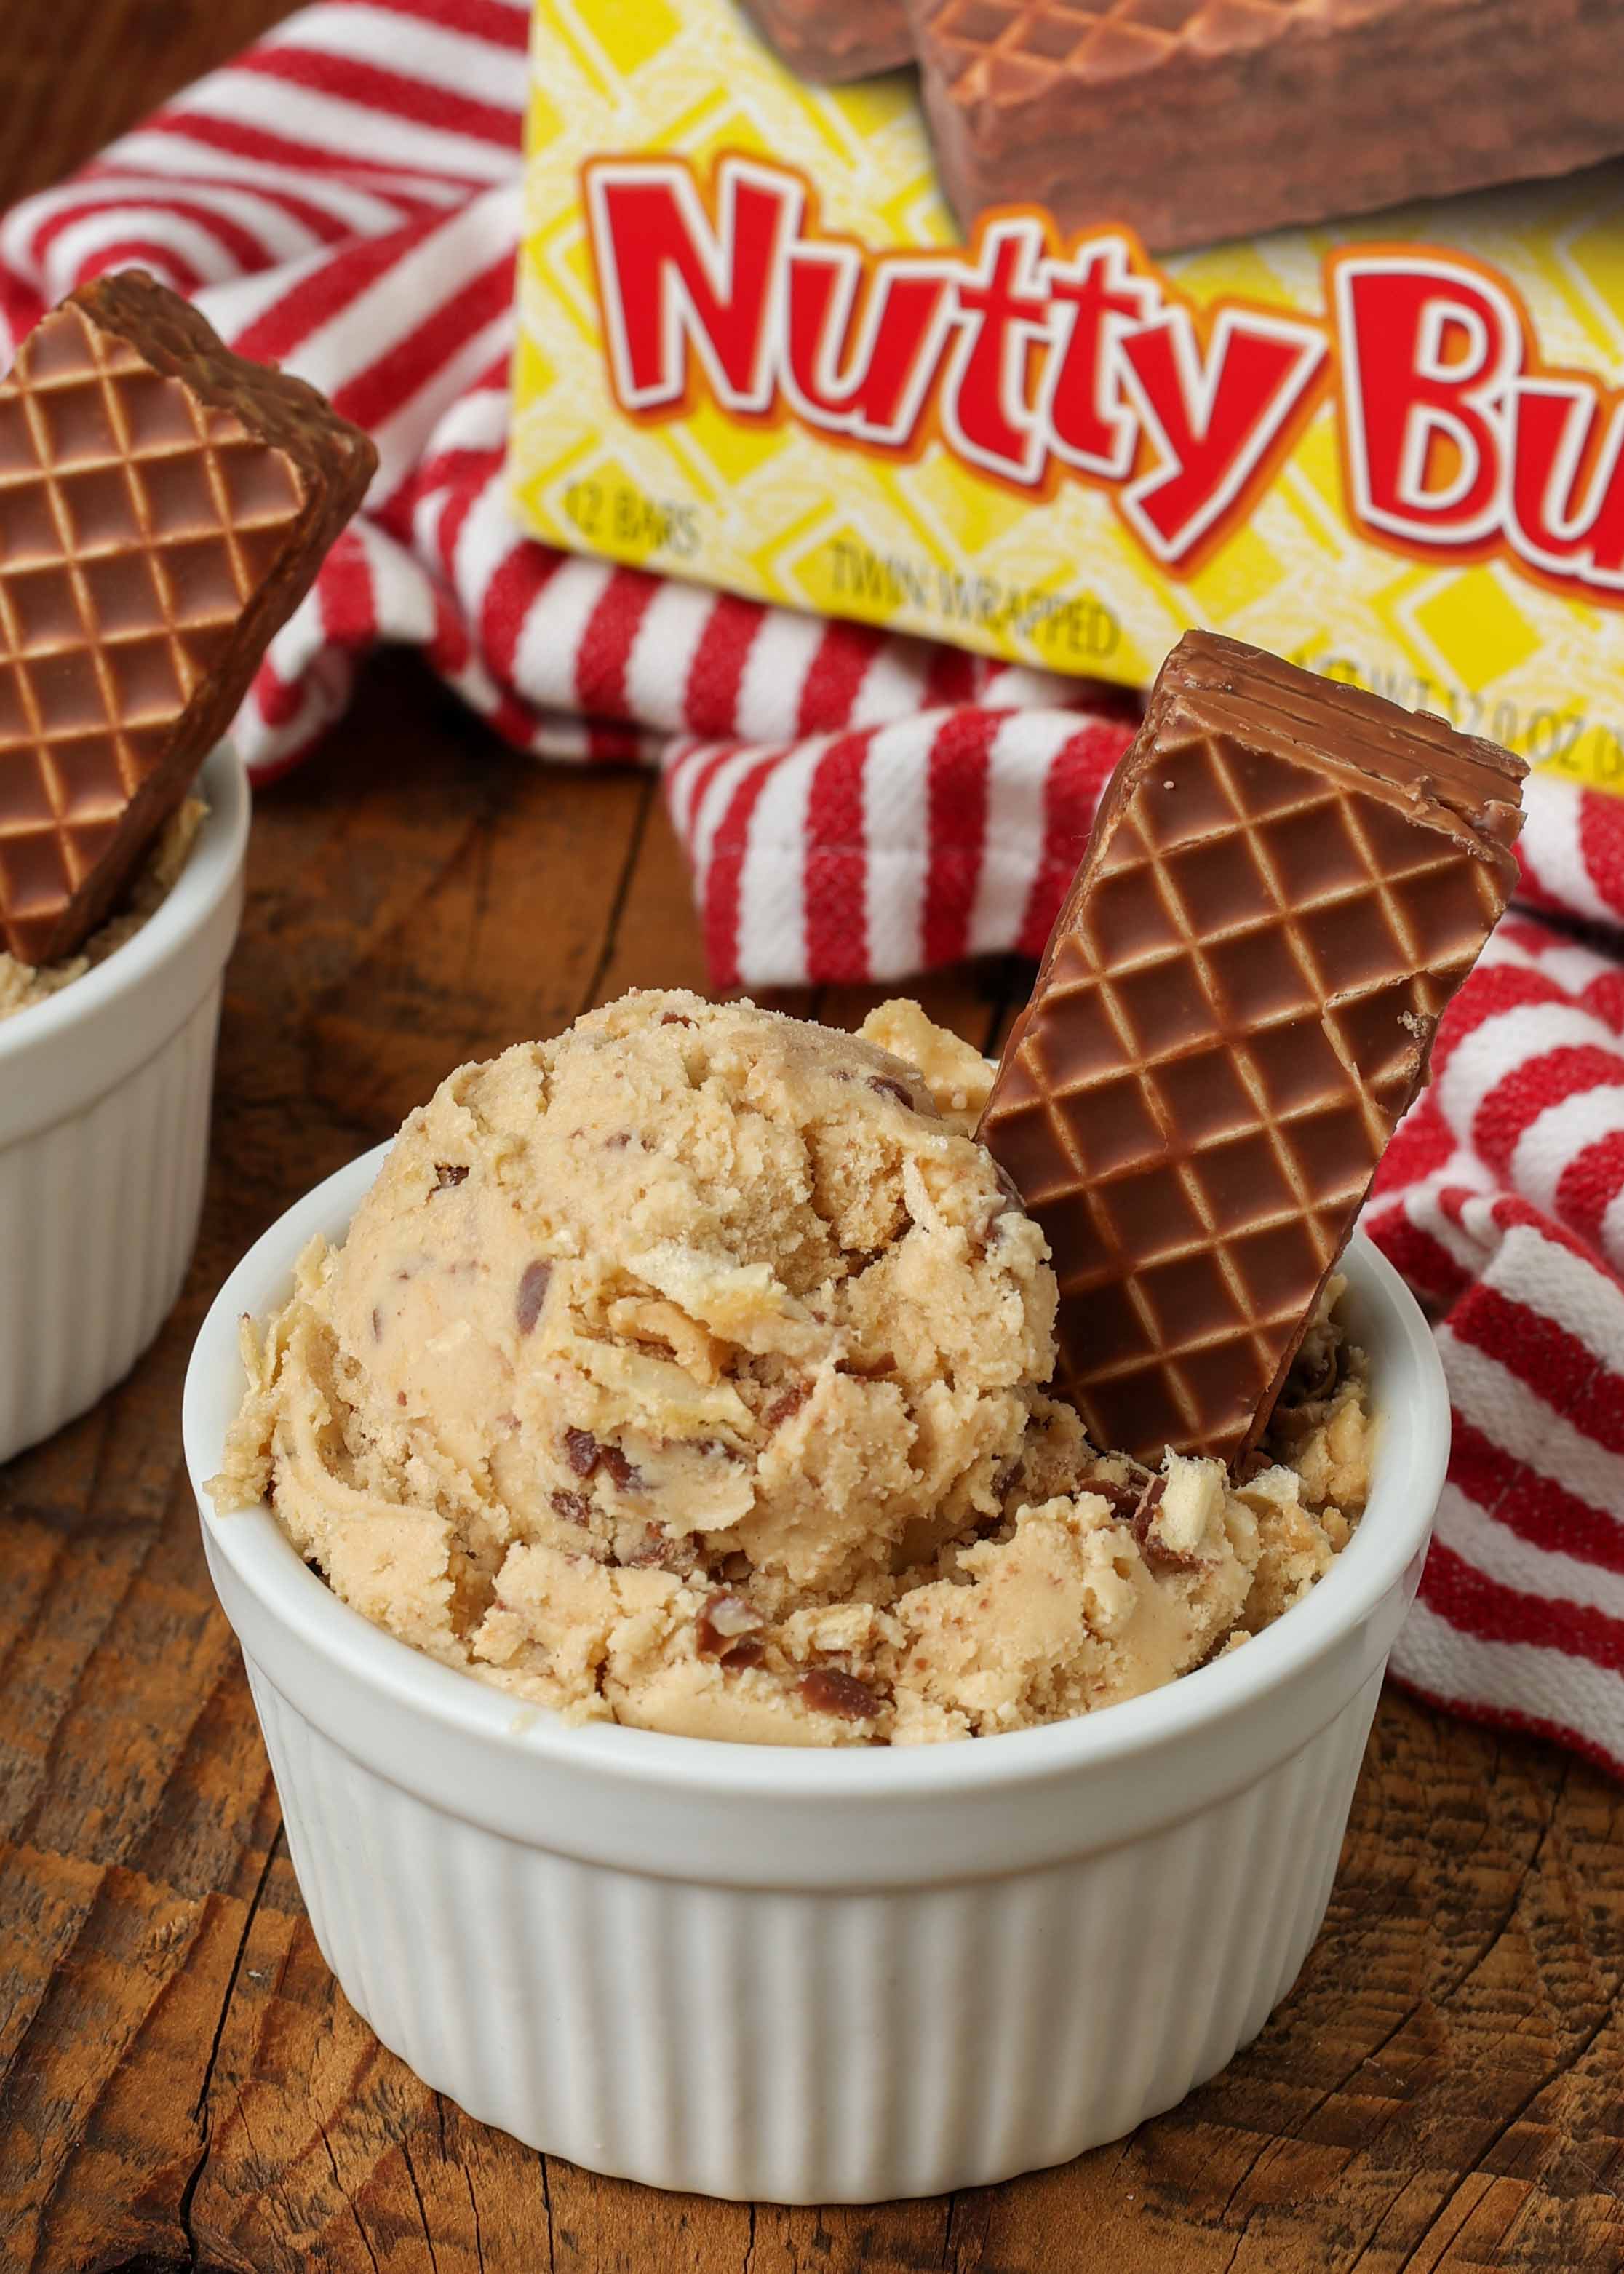 Nutterbuddy Ice Cream Recipe